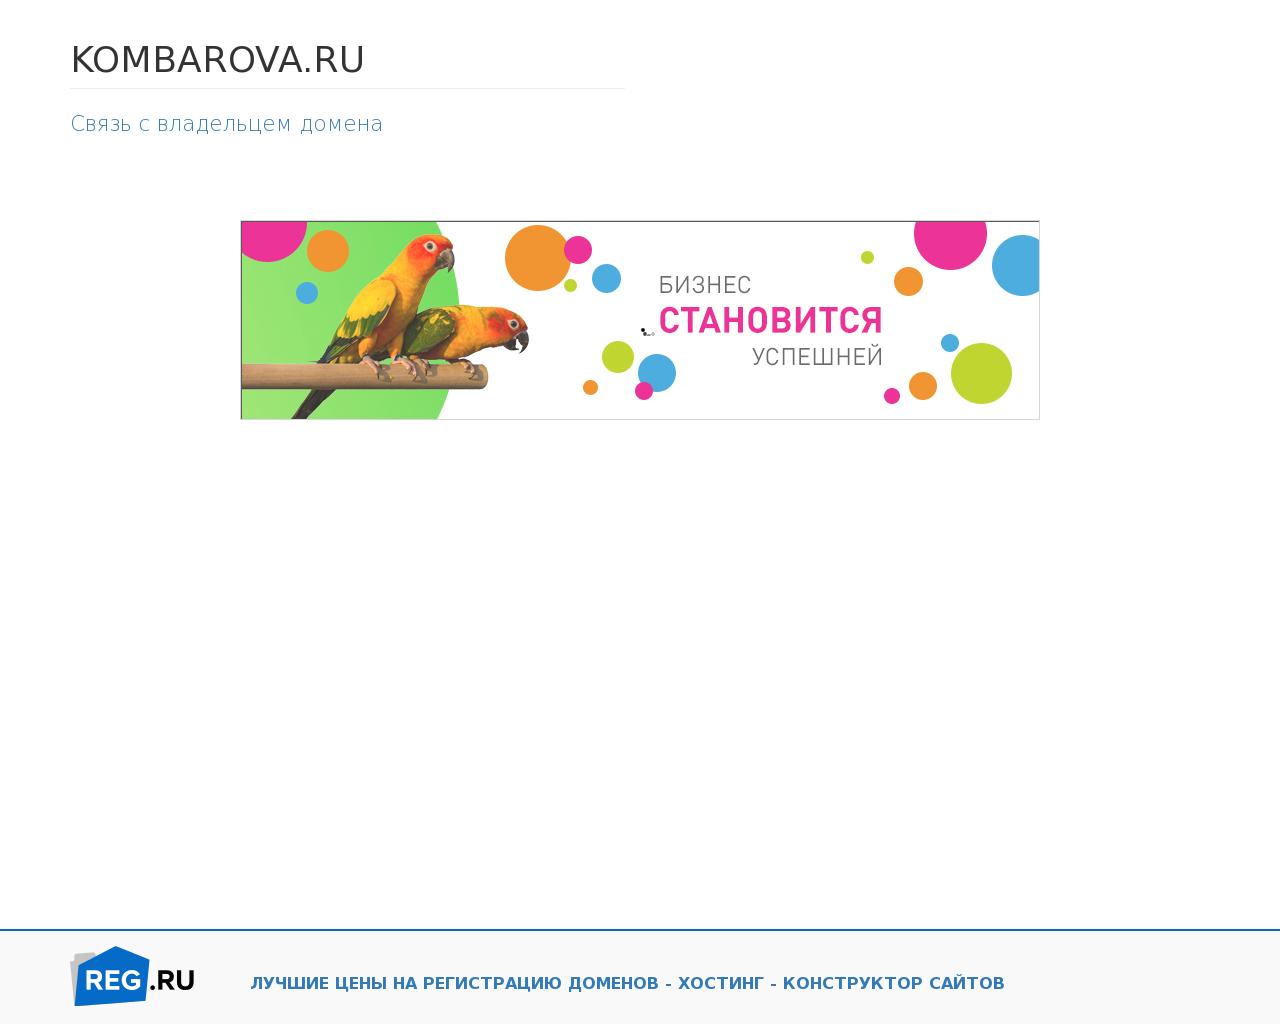 Изображение сайта kombarova.ru в разрешении 1280x1024